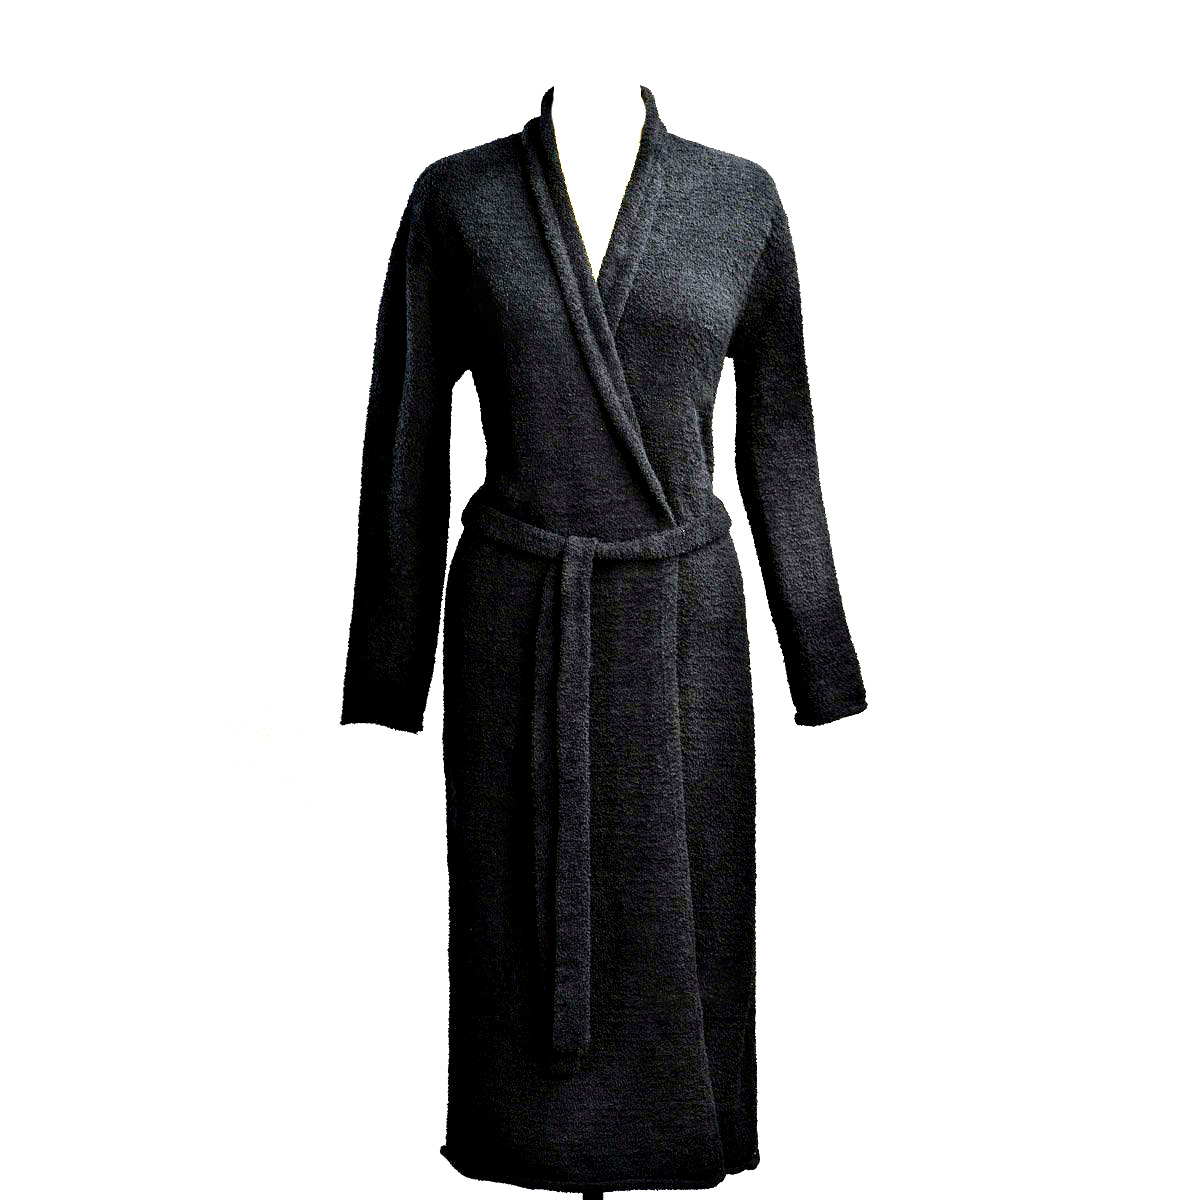 Black & Grey Designer Fur cuffs  Women Casual and Cocktail Dresses by  Canadian designer Masabni